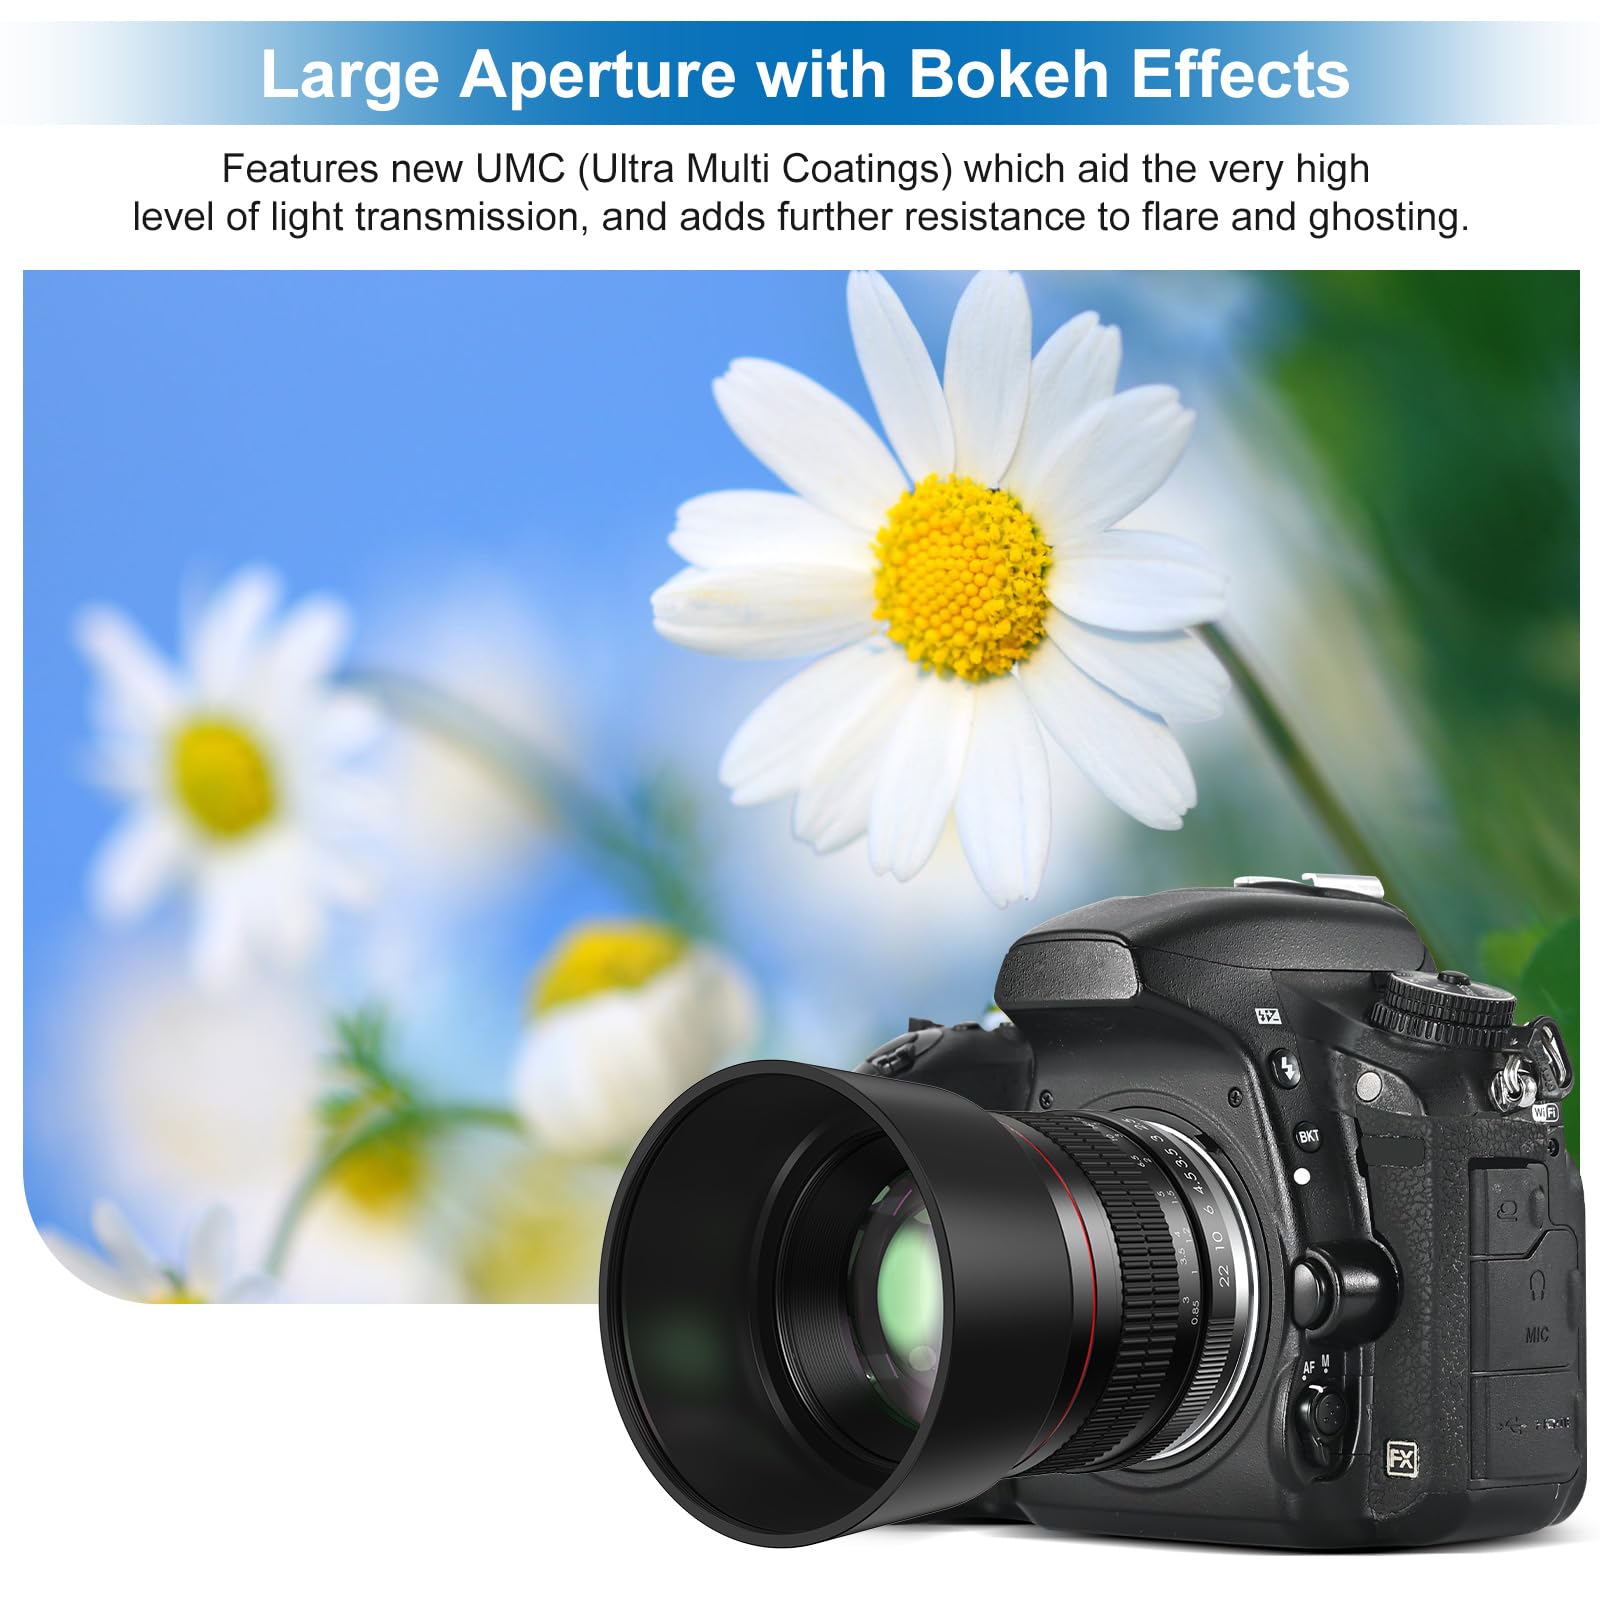 Lightdow 85mm F1.8 Medium Telephoto Manual Focus Full Frame Portrait Lens for Nikon D7500 D7200 D5600 D5500 D5300 D5200 D5100 D3500 D3400 D3300 D3200 D850 D810 D800 D750 D610 D500 D60 D6 D5 D4 etc